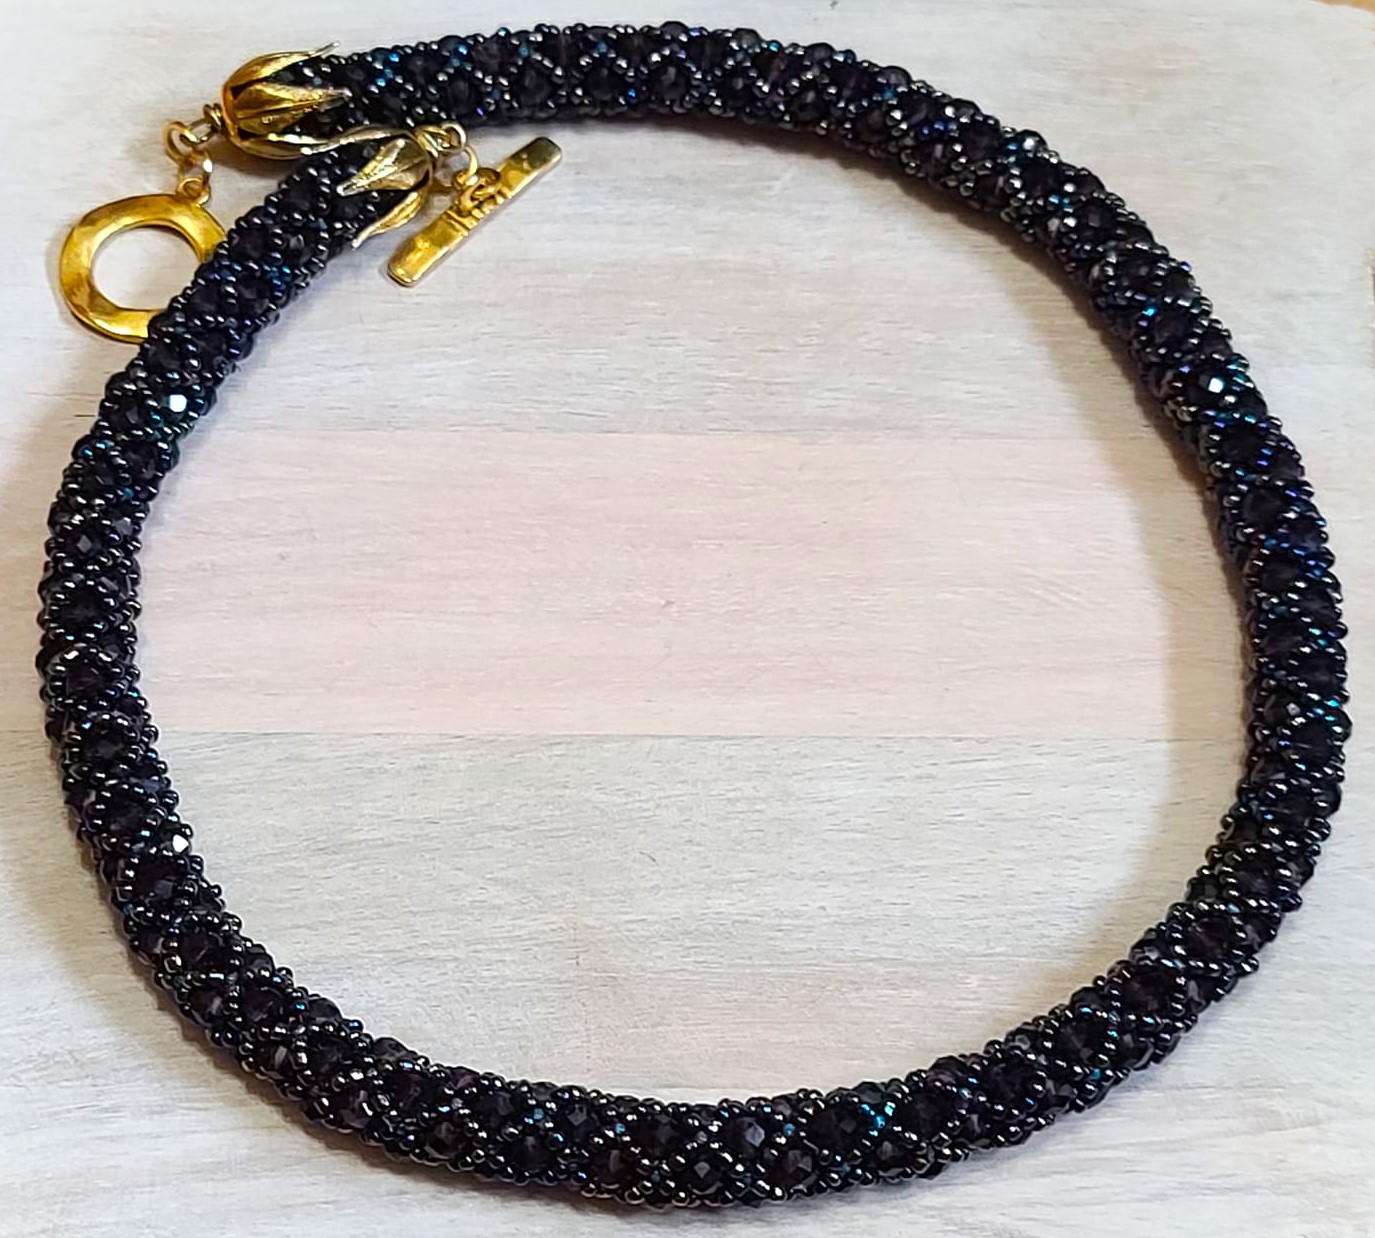 Beaded rope necklace, carnival glass, miyuki glass, crystal